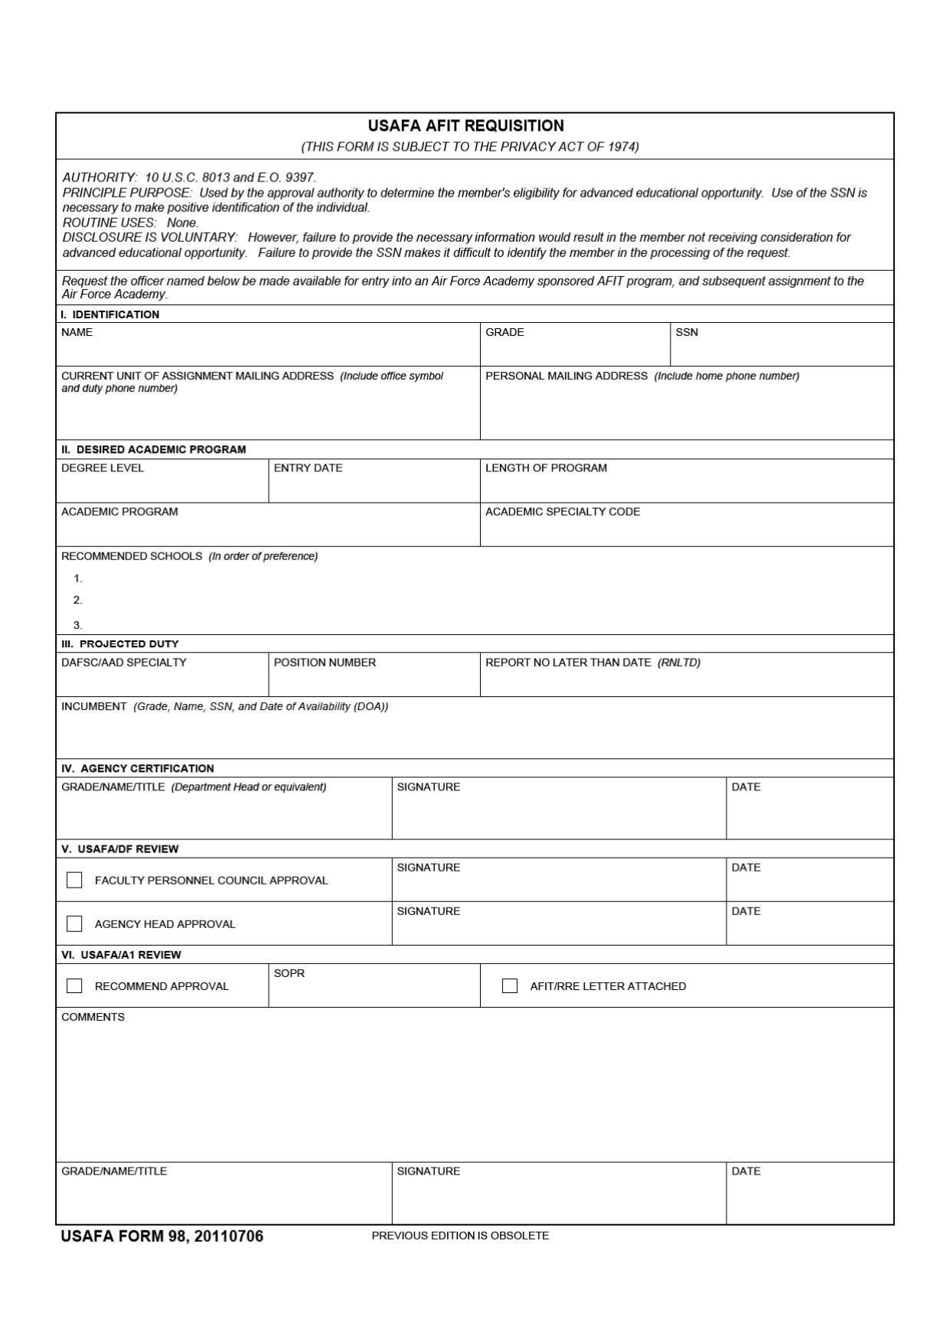 USAFA Form 98 Usafa Afit Requisition, Page 1